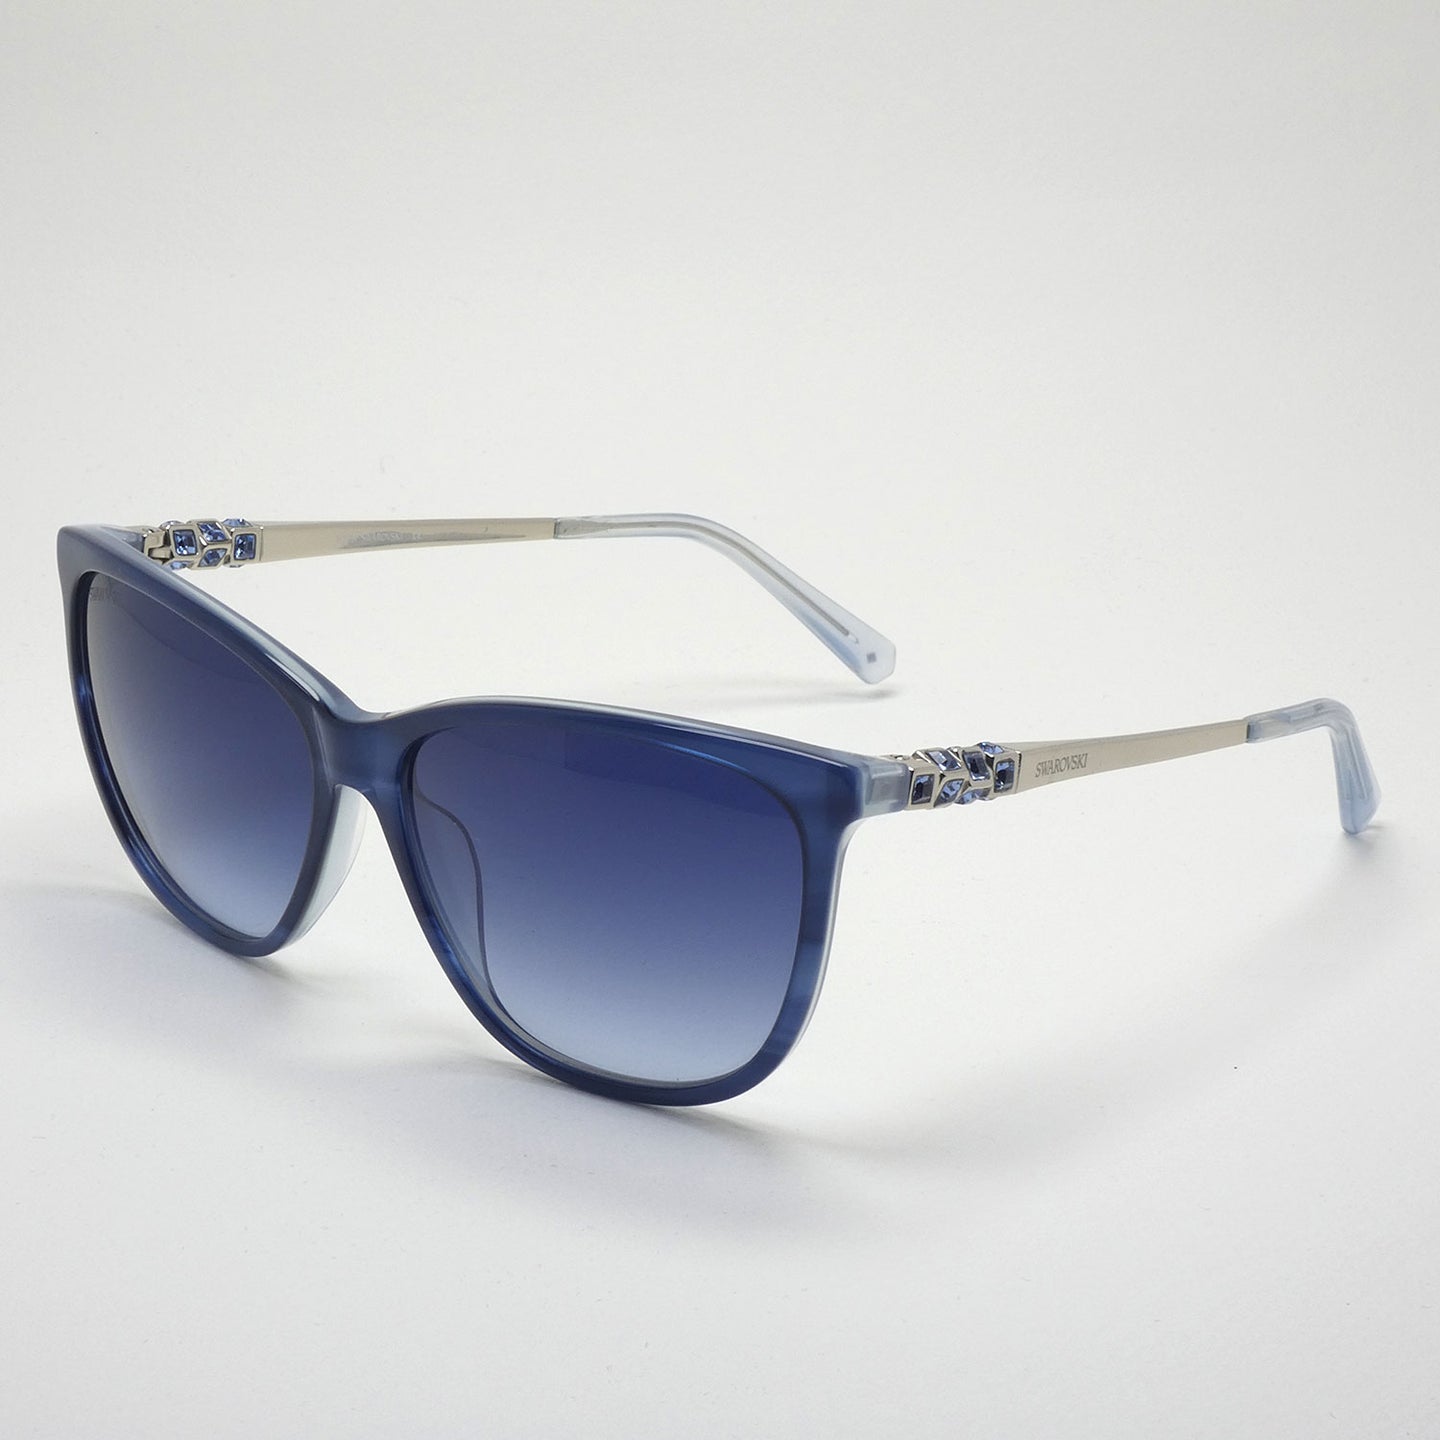 Sunglasses Swarovski SK 225 92W size 56 angled view